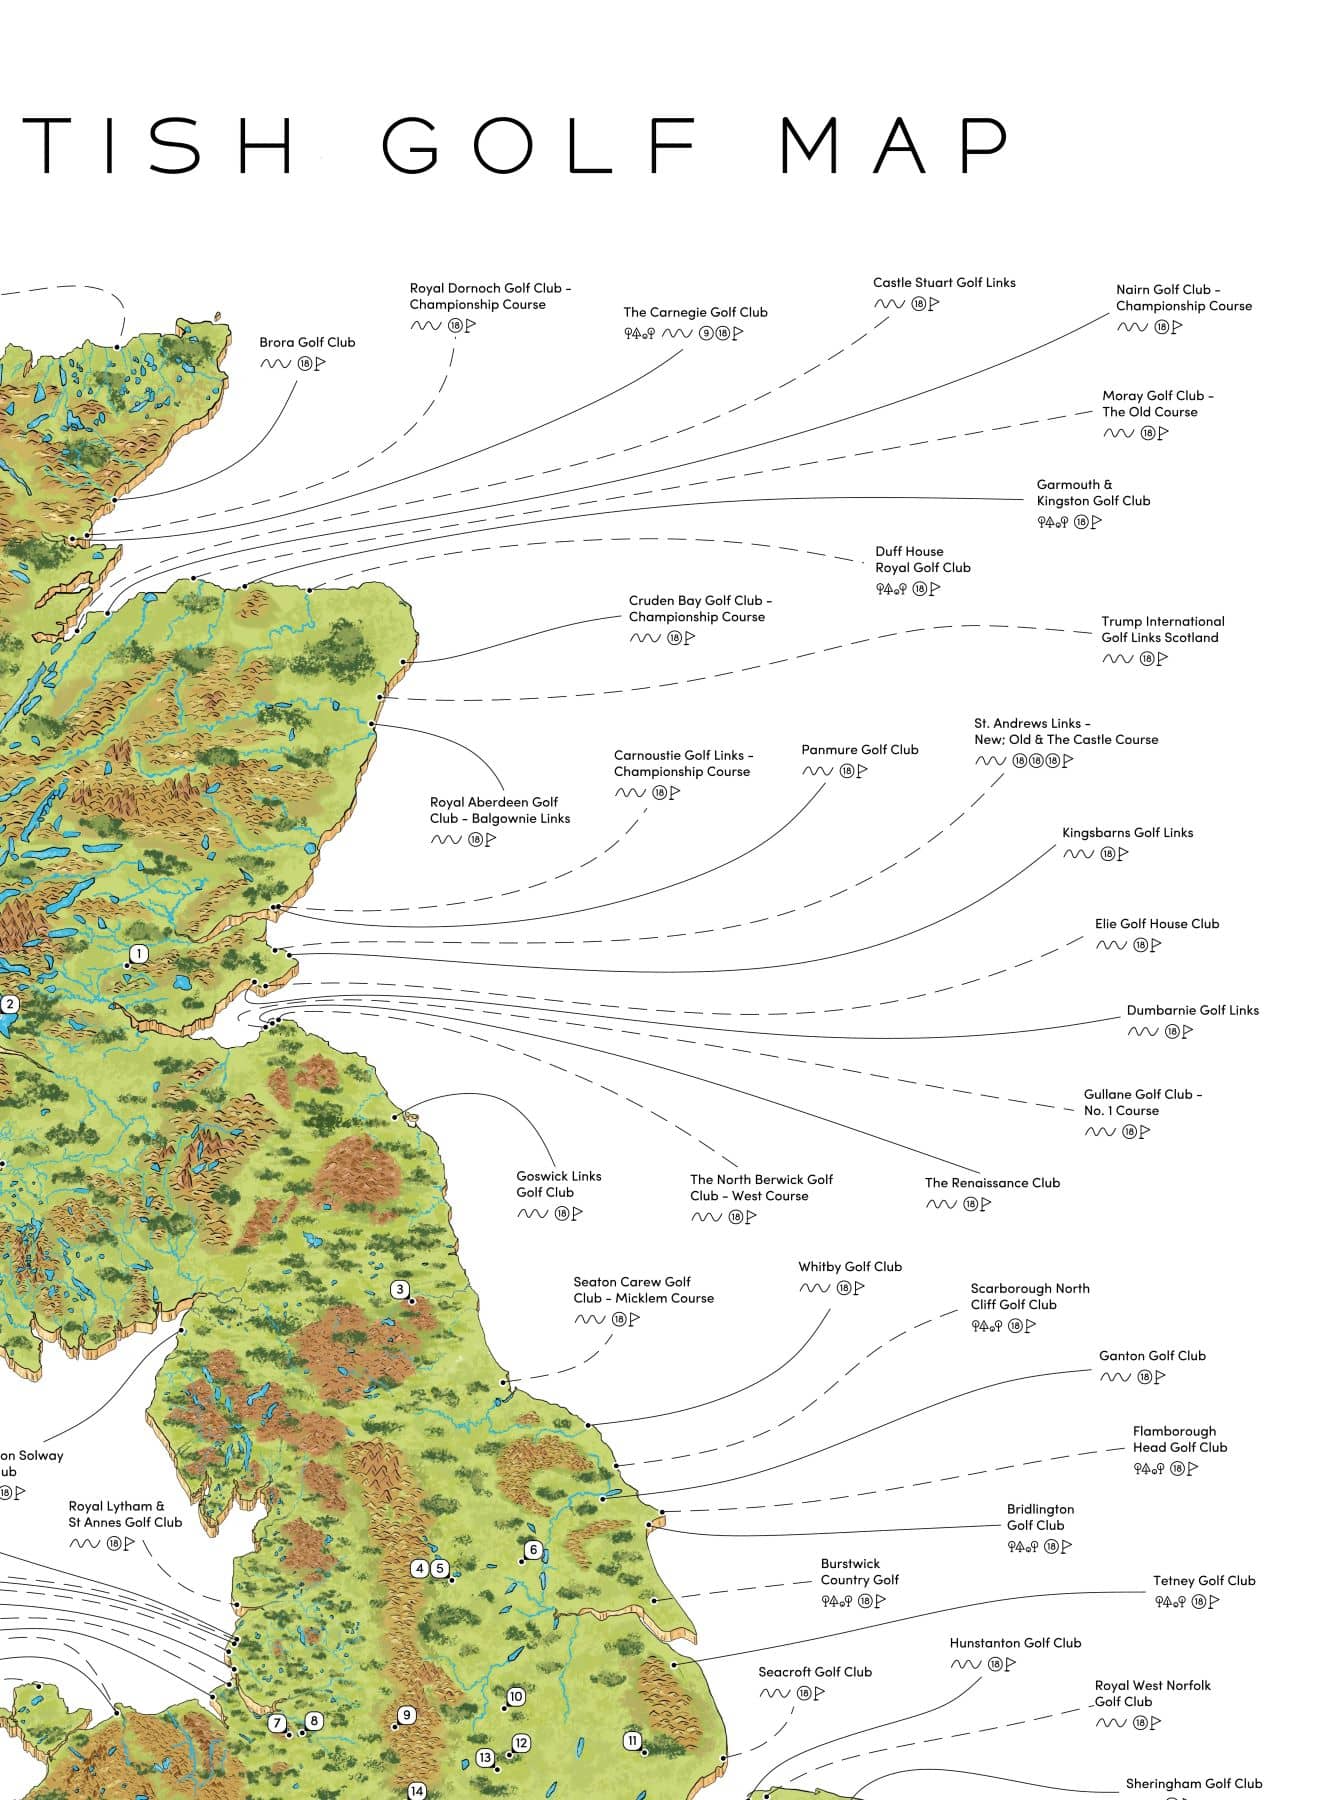 The British Golf Map